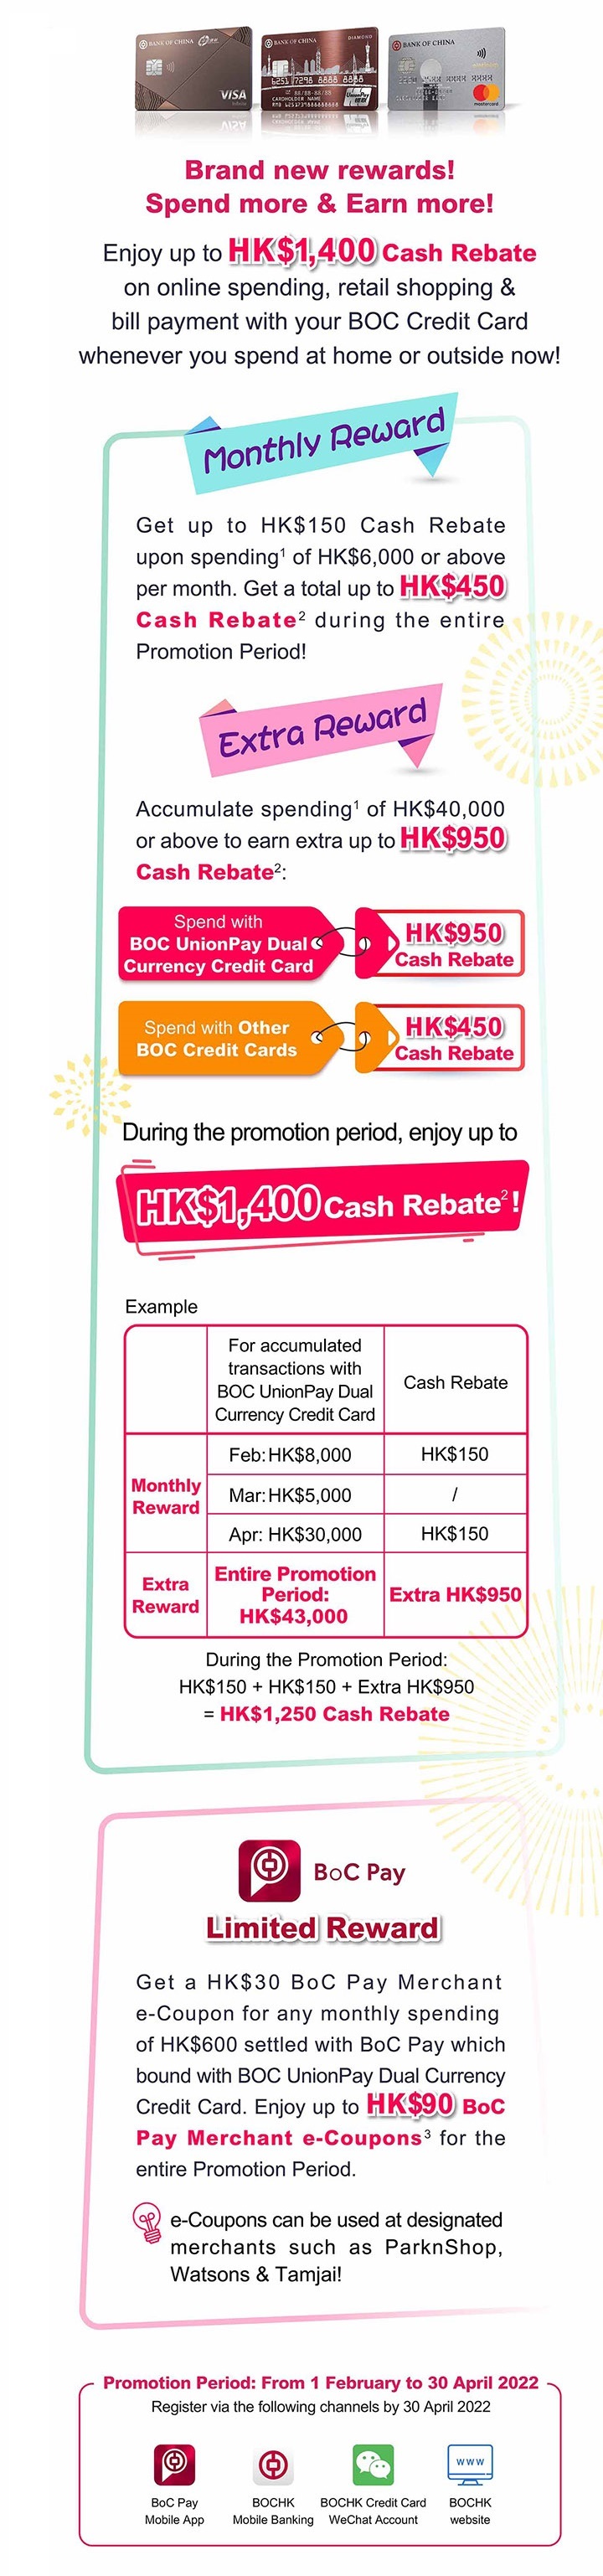 Enjoy Up To HK 1 400 Cash Rebate With BOC Credit Card Credit Card 